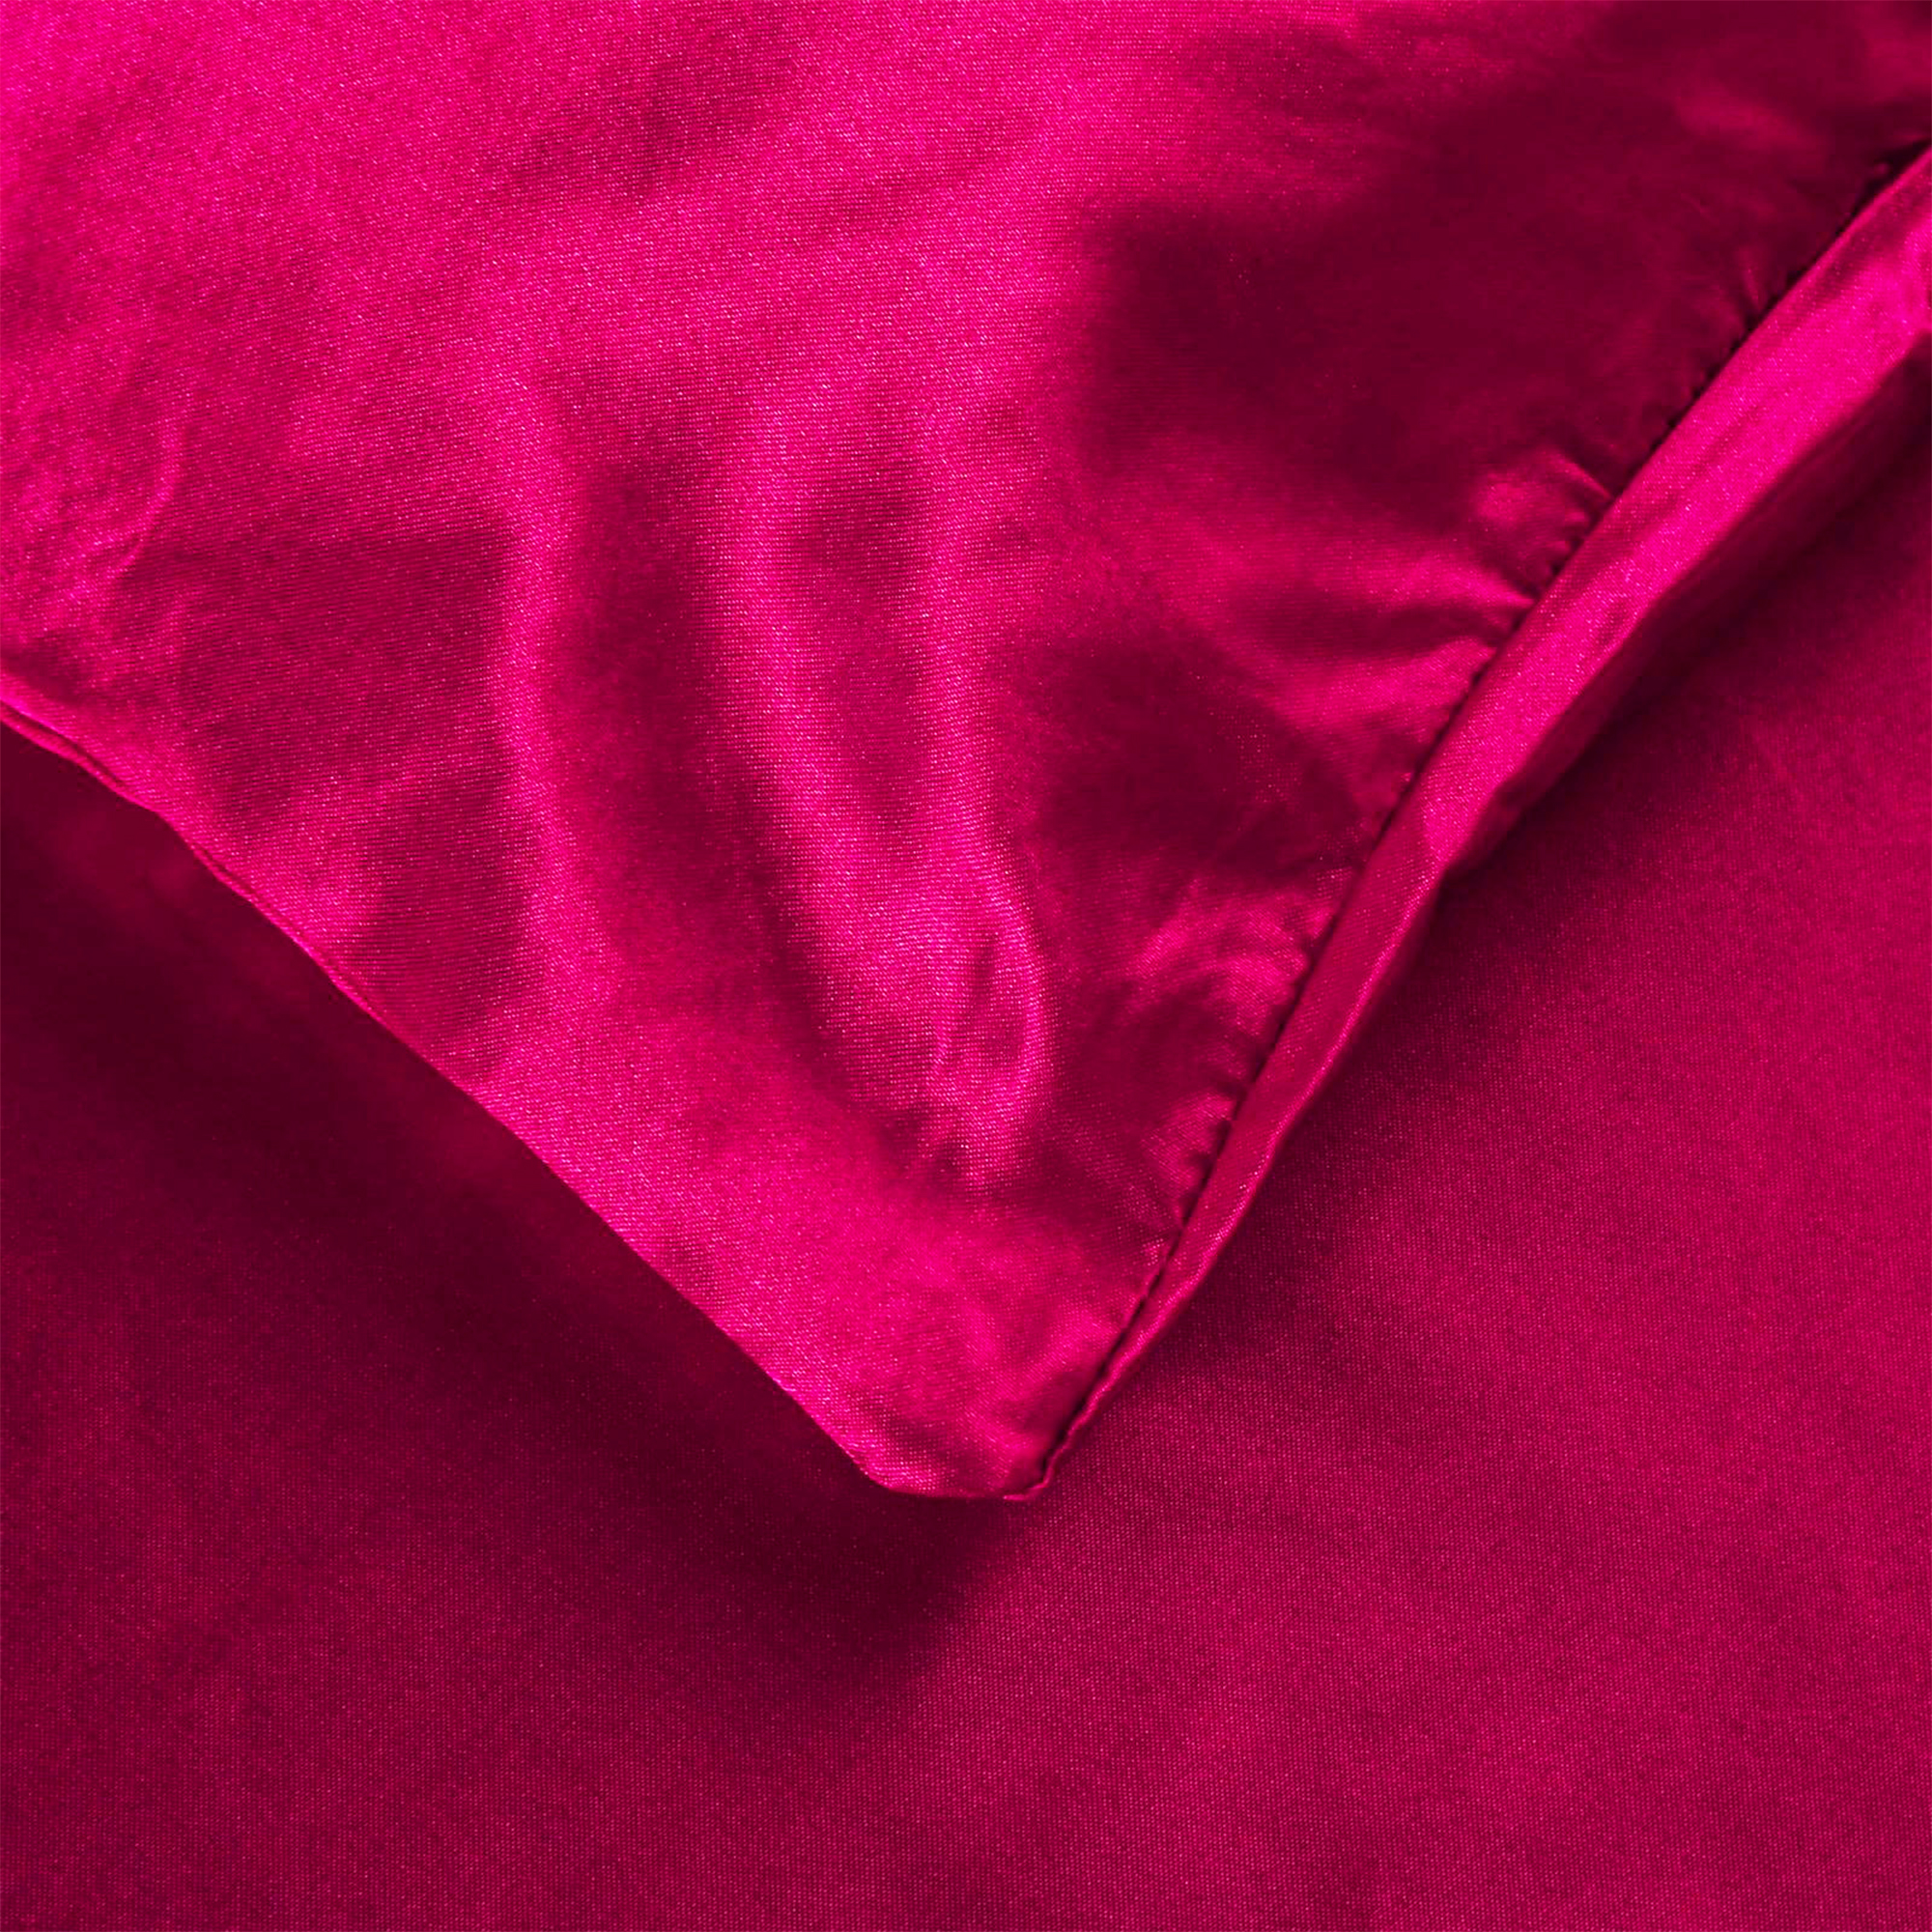 Fuchsia Pink 6pc Satin Panel King Bed Duvet Quilt Cover Set